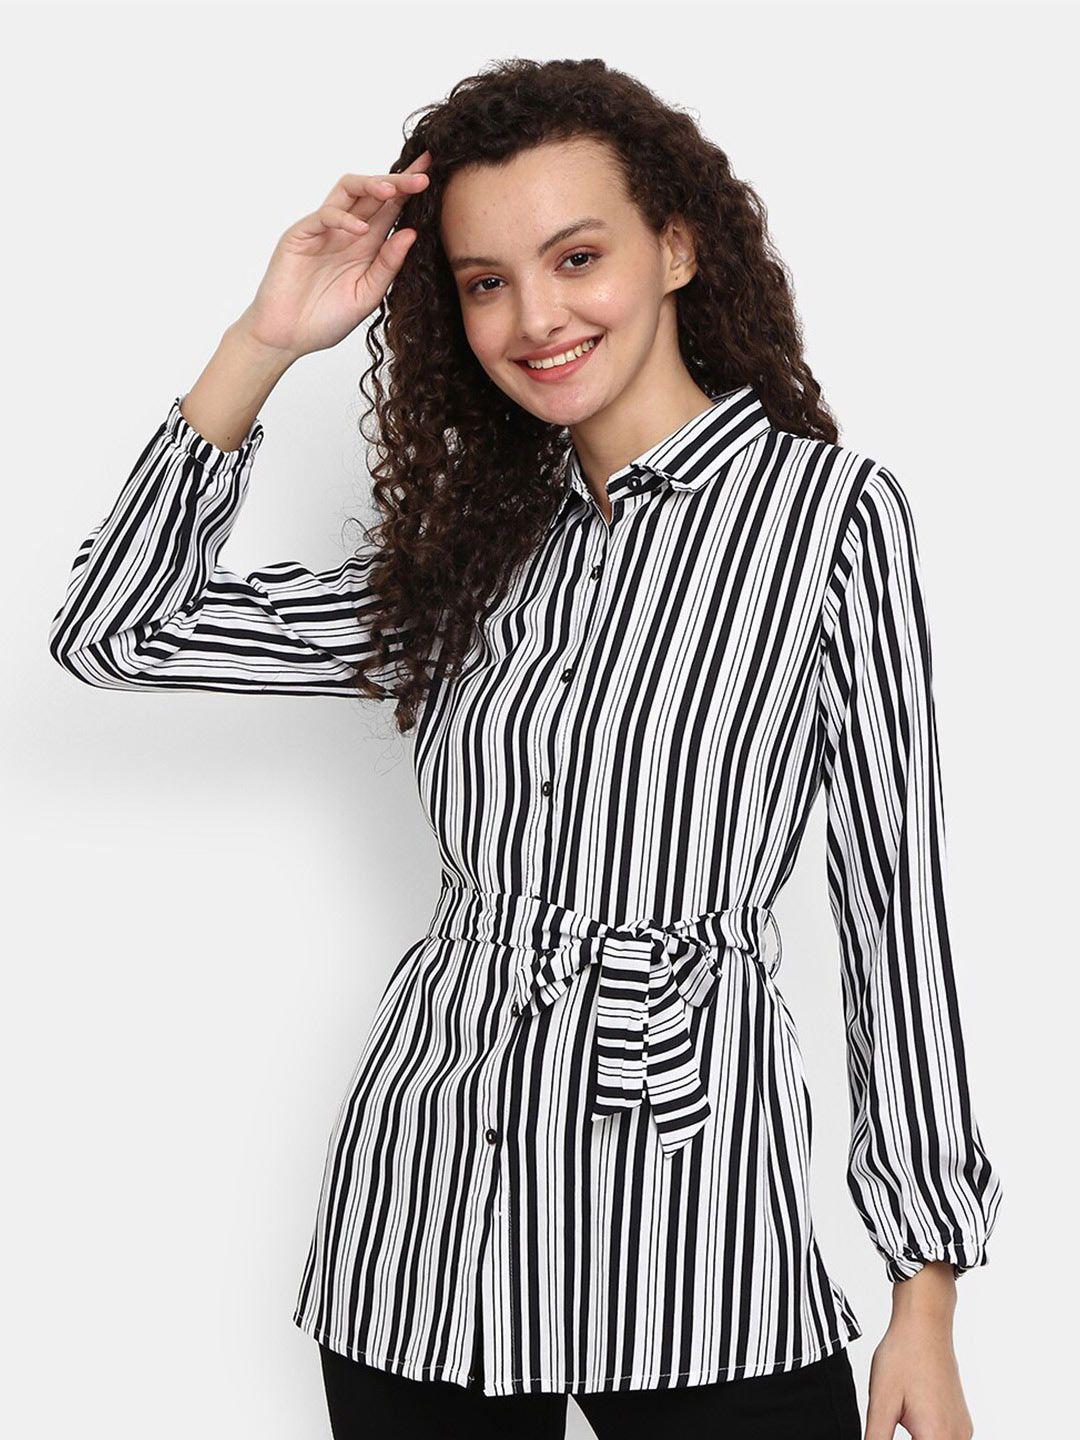 v-mart black & white striped shirt style top